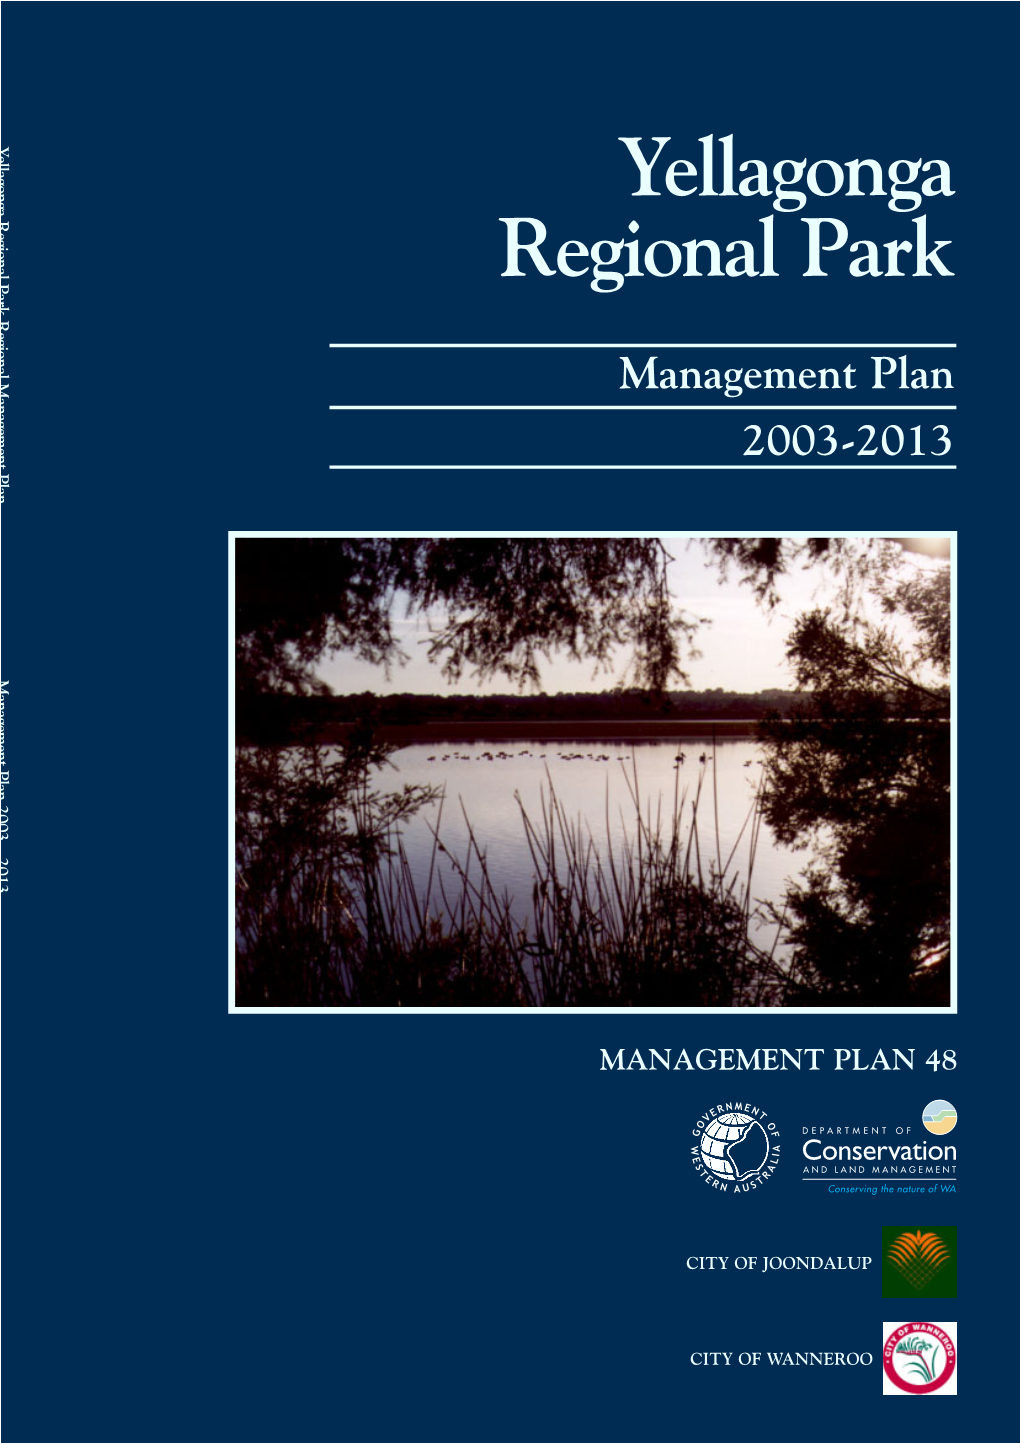 Yellagonga Regional Park Management Plan 2003-2013